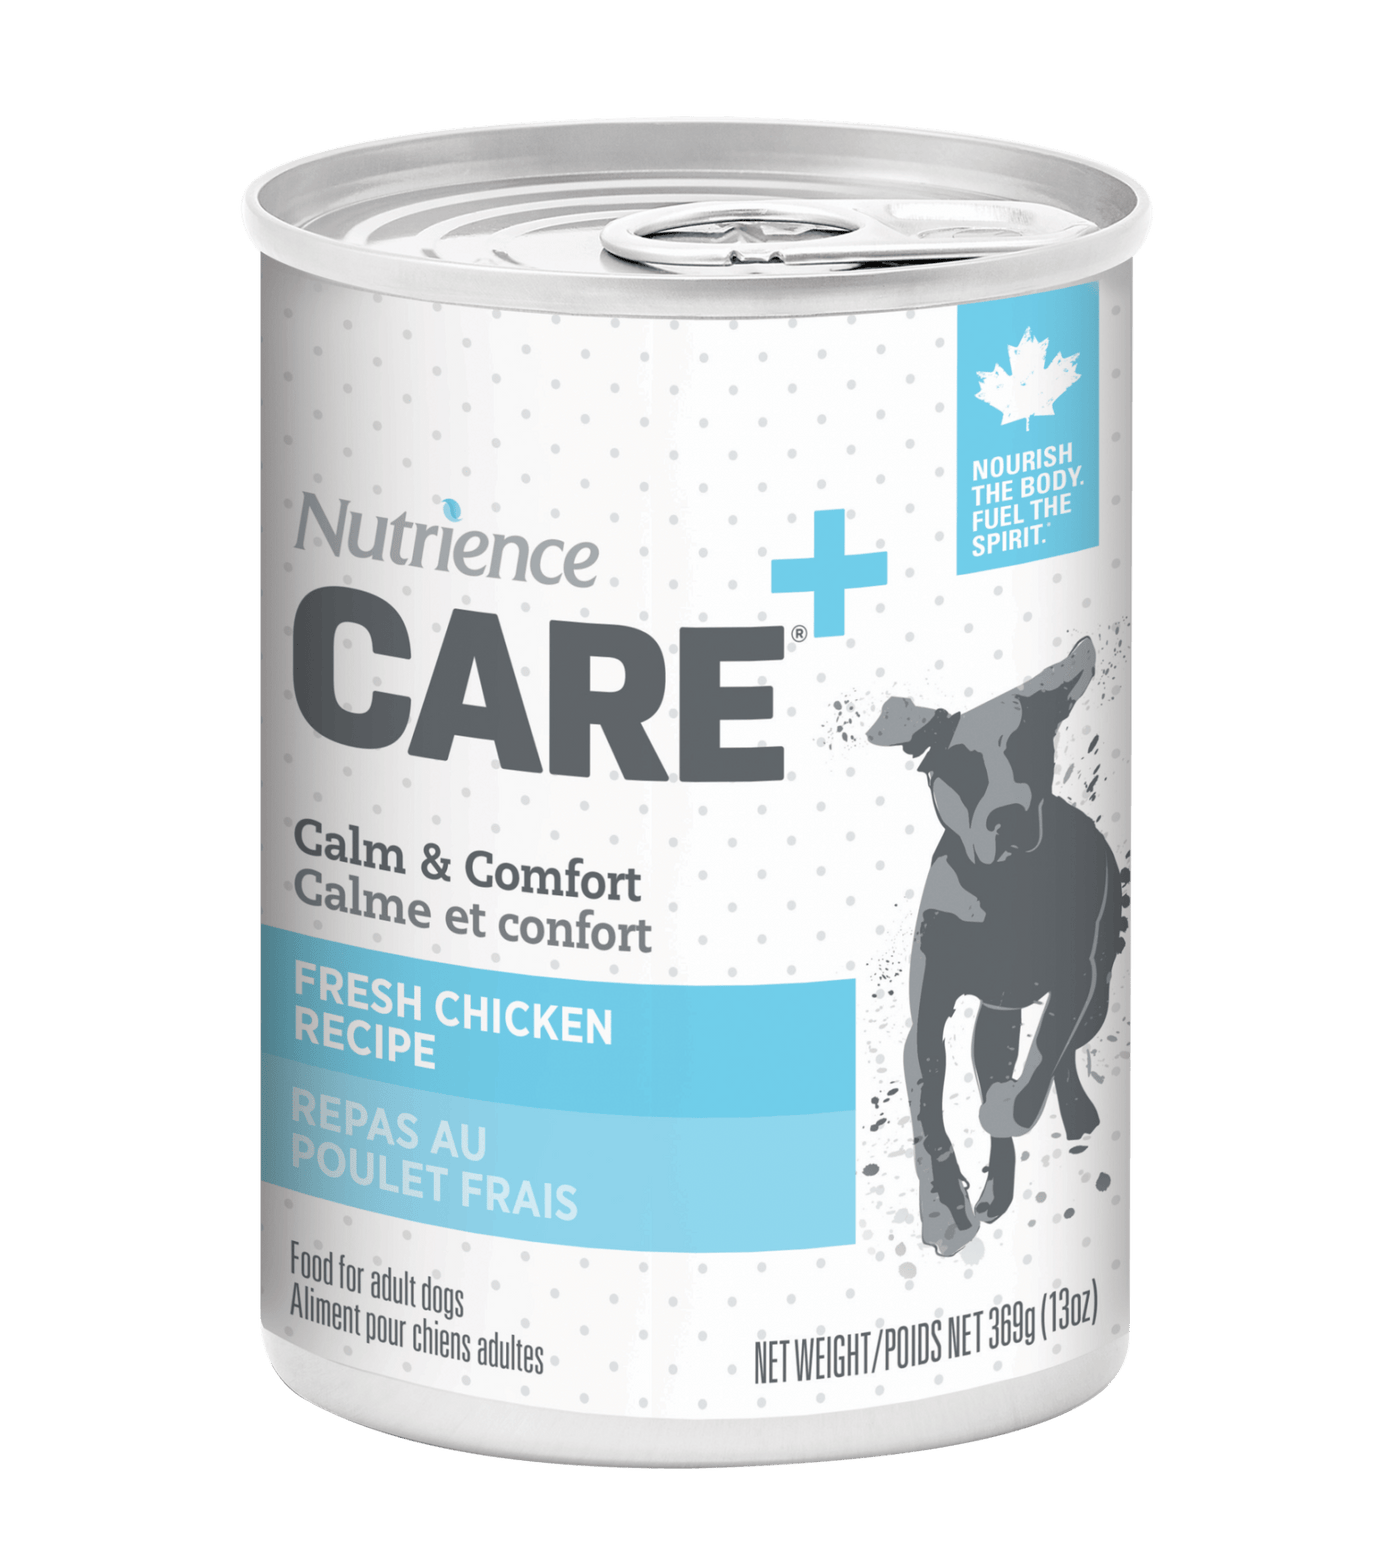 Calm & Comfort – Wet Dog Food - Nutrience - PetToba-Nutrience